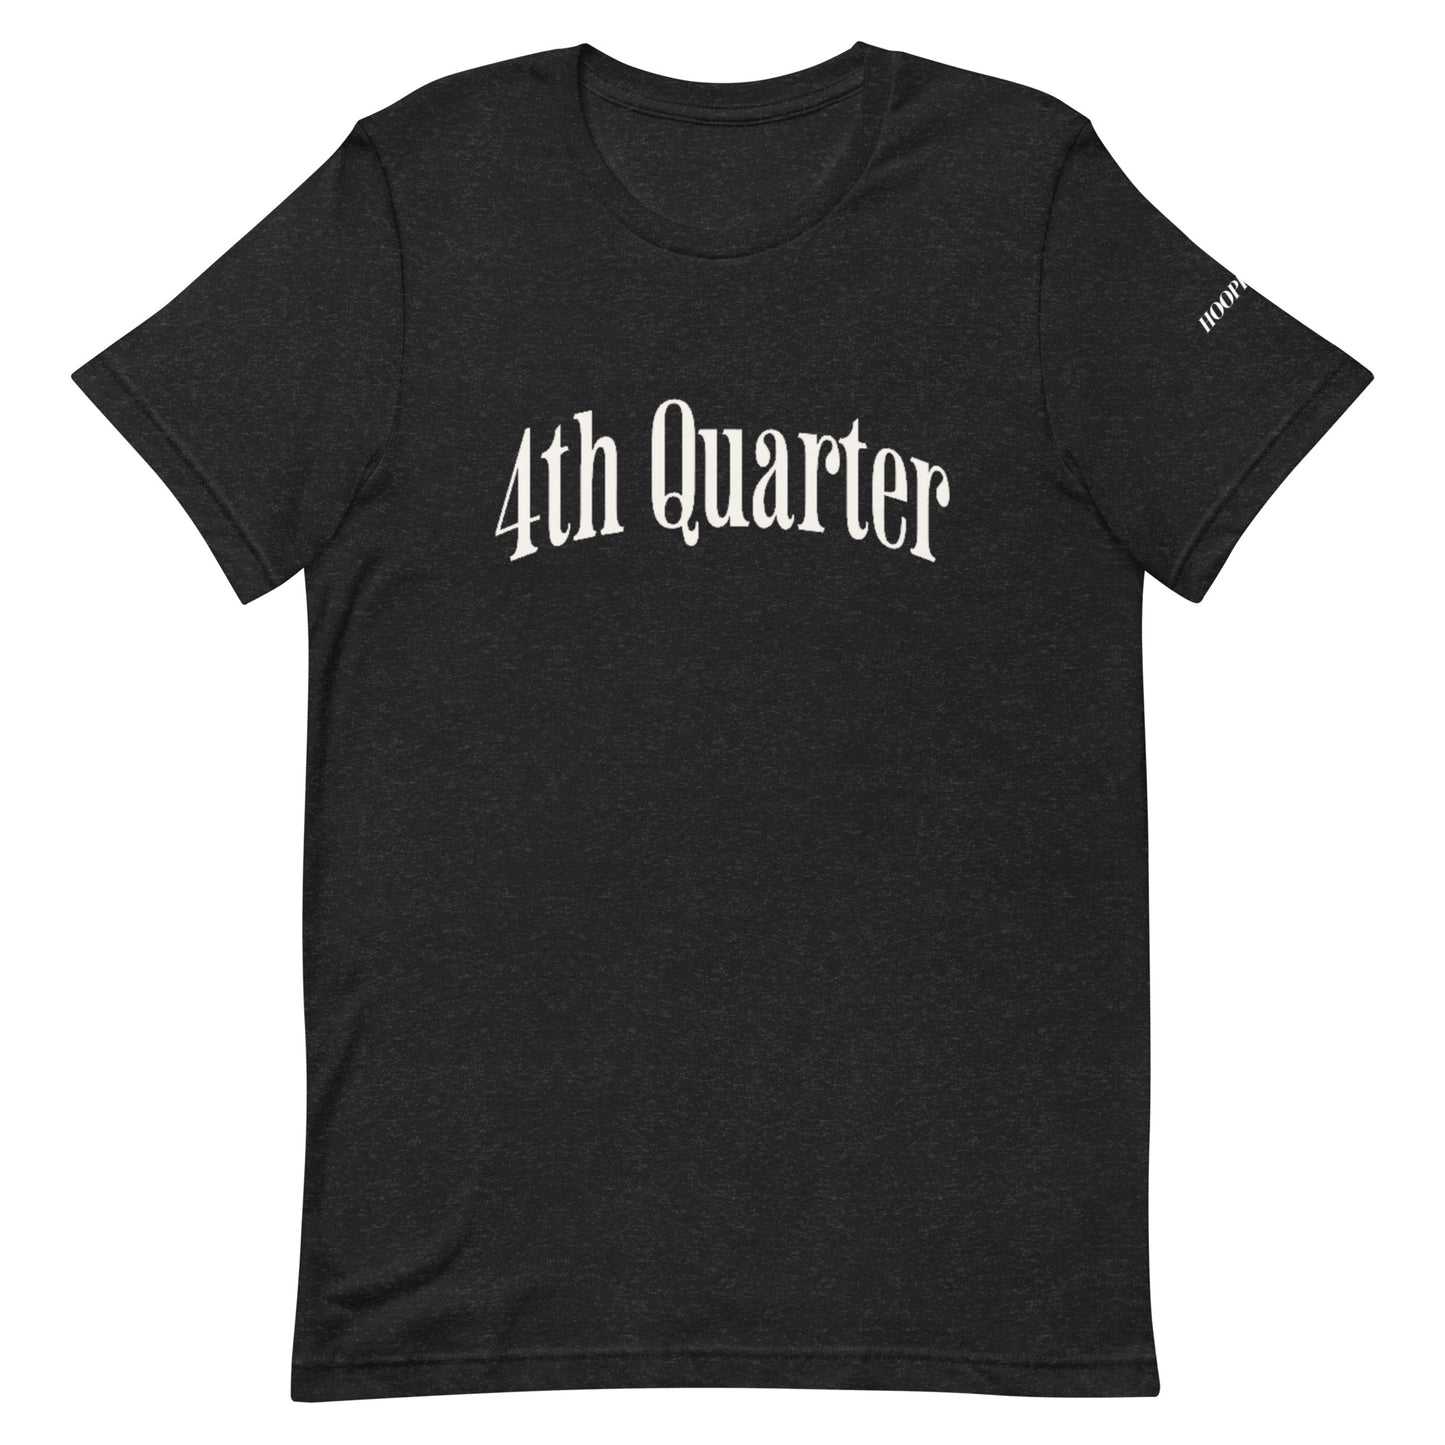 4th Quarter Tee